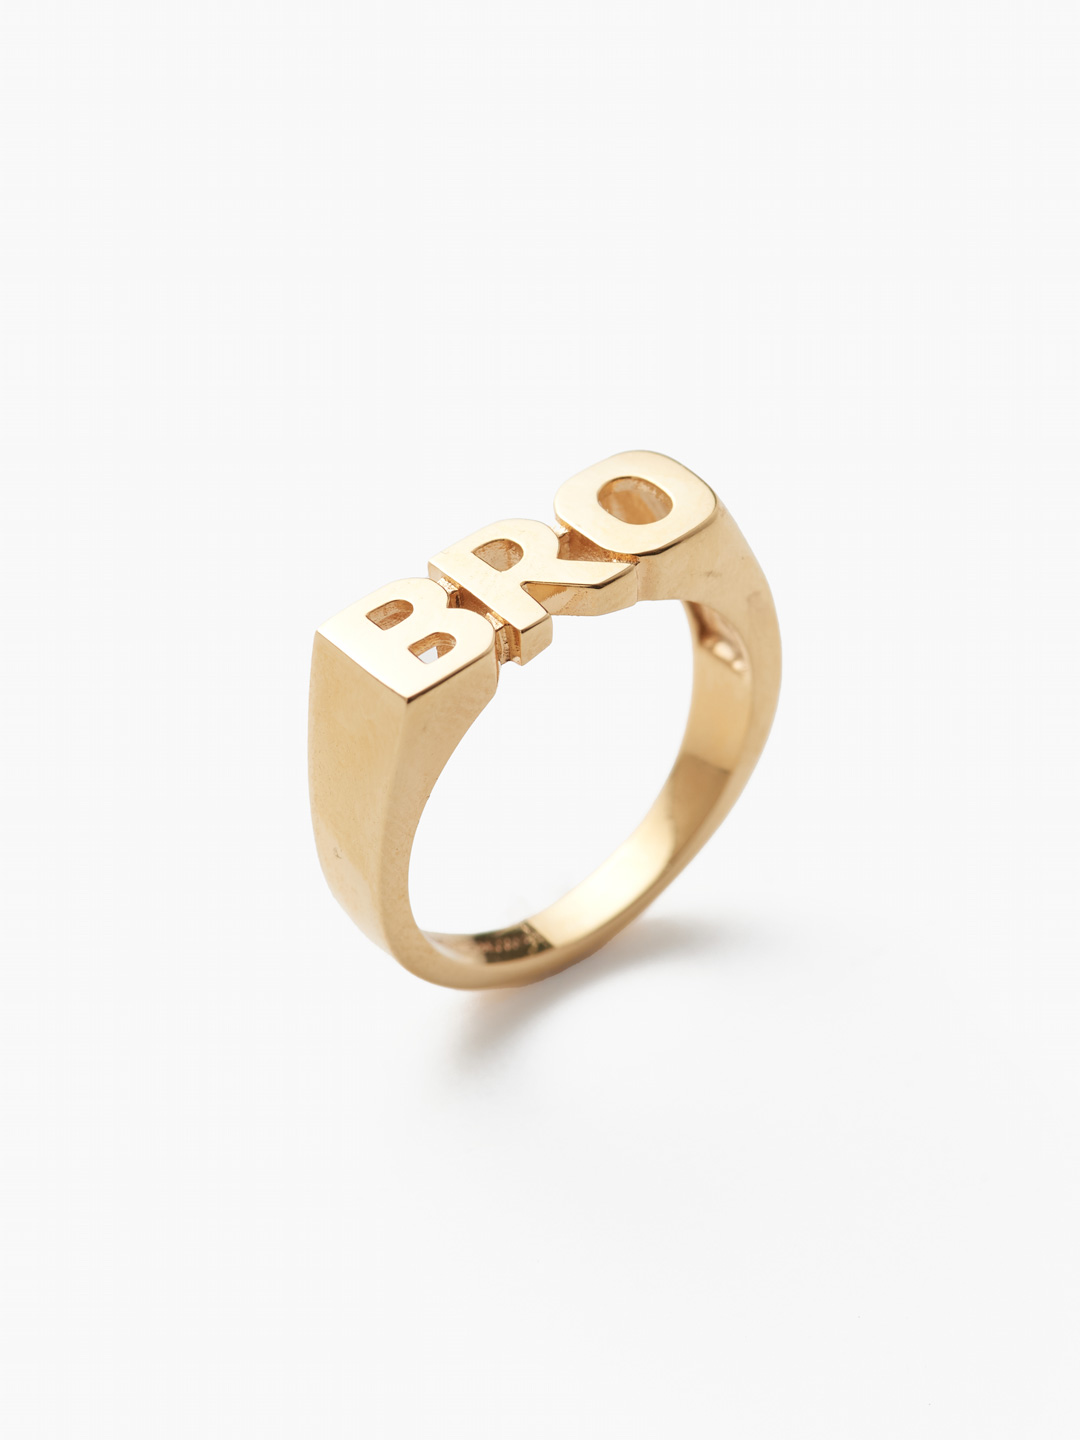 BRO Ring Gold - Yellow Gold